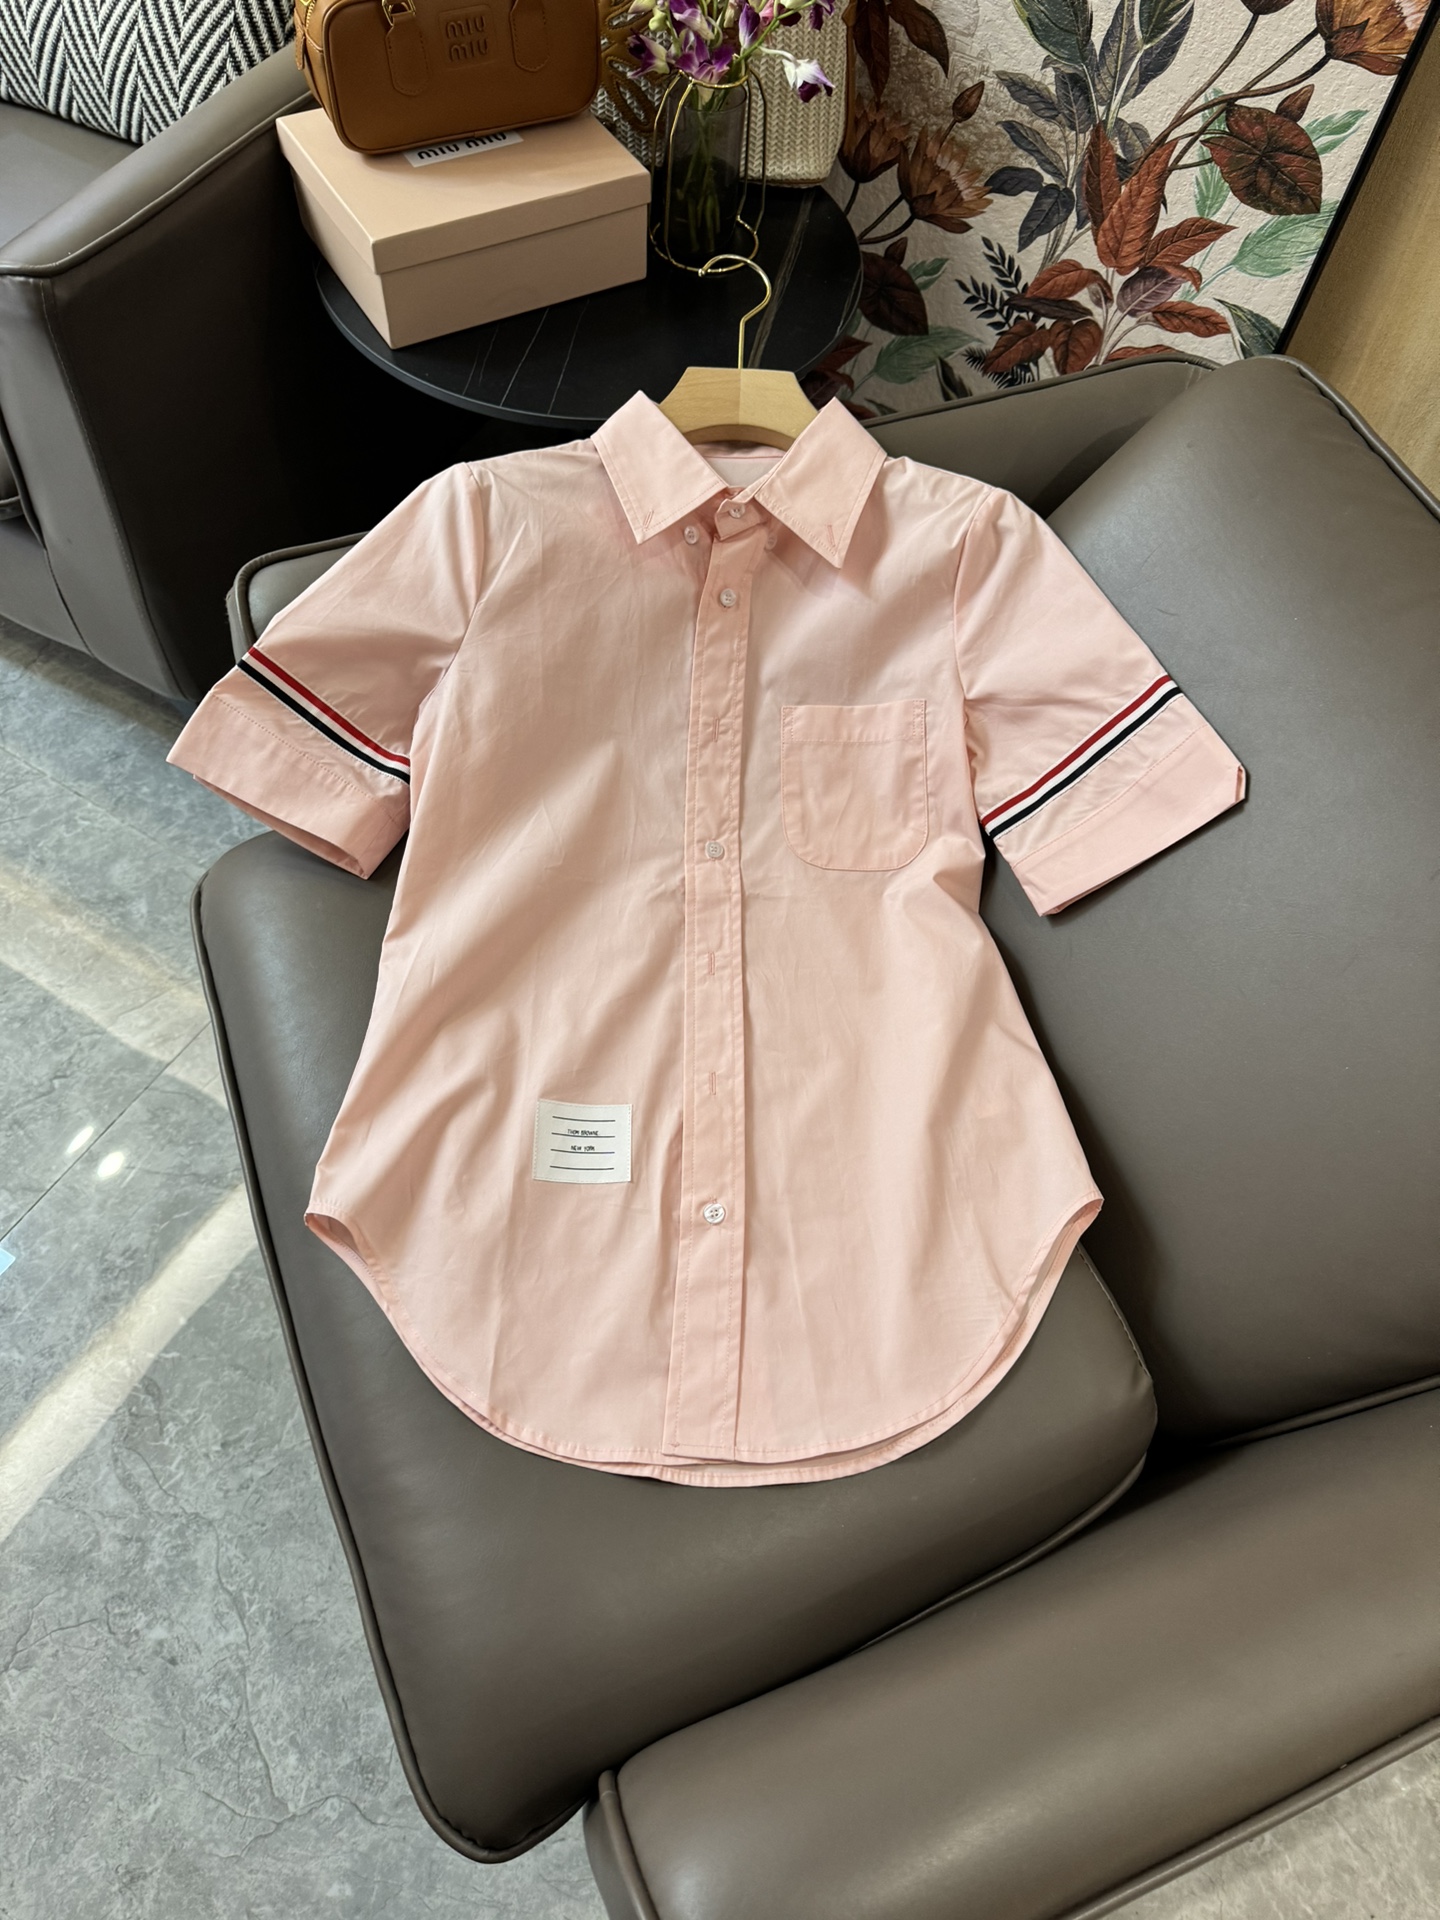 CS016#新款衬衫⚠️Pzddll????\nTB 条纹短袖修身衬衫 粉色 白色 SML